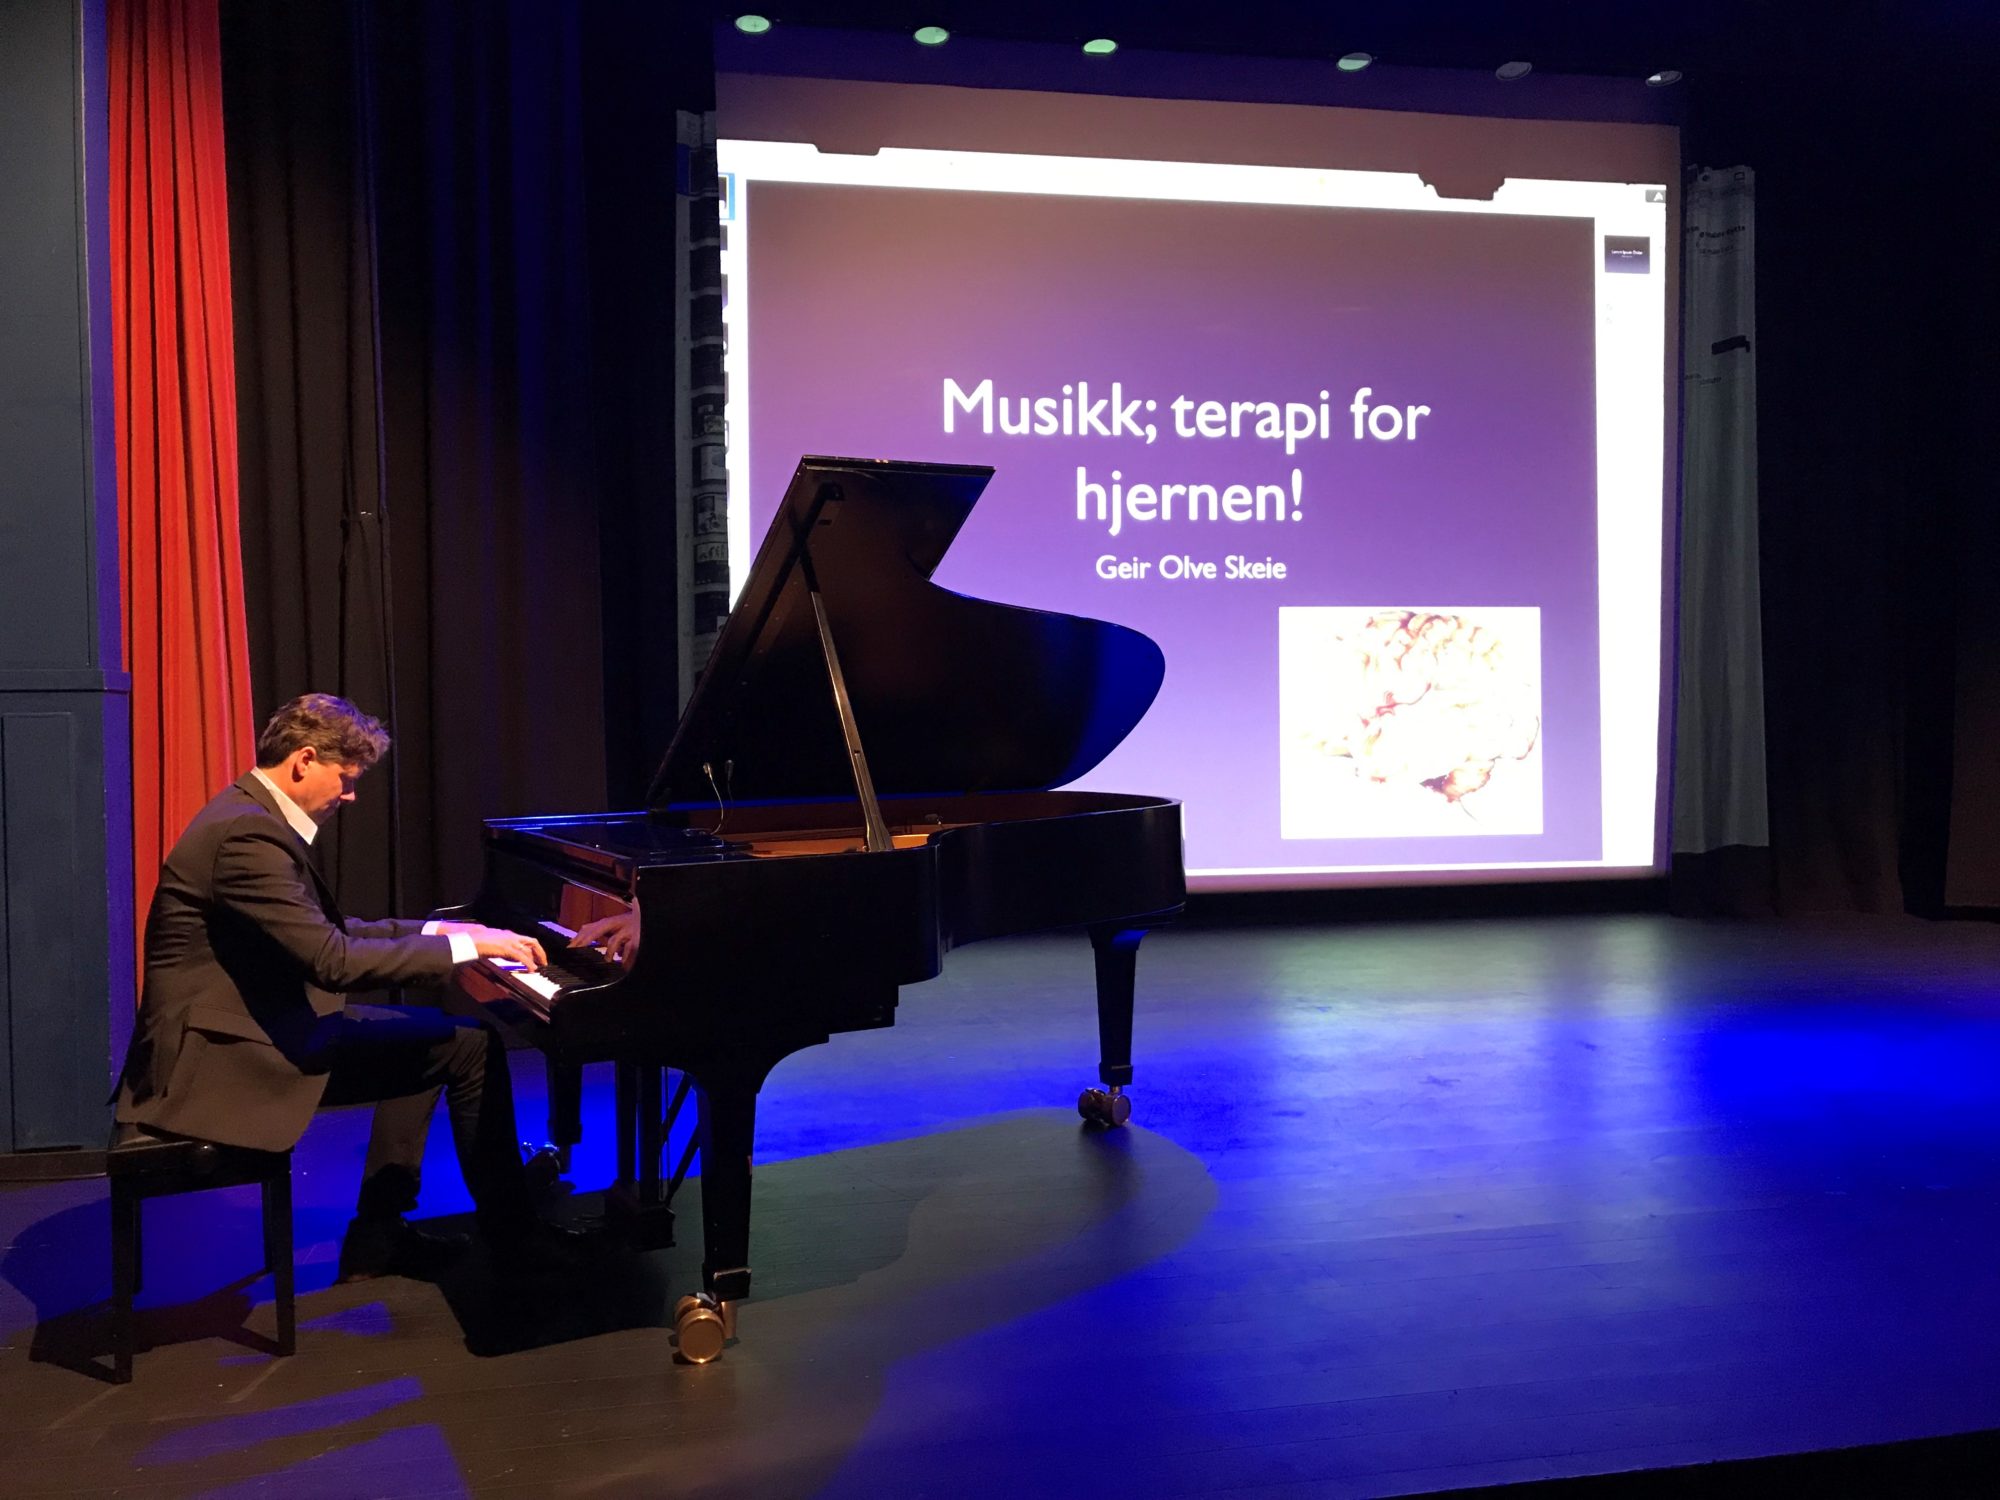 Nevrolog og pianist Geir Olve Skeie holdt foredrag om "Musikk og hjernen". Foto: Marthe Haugdal